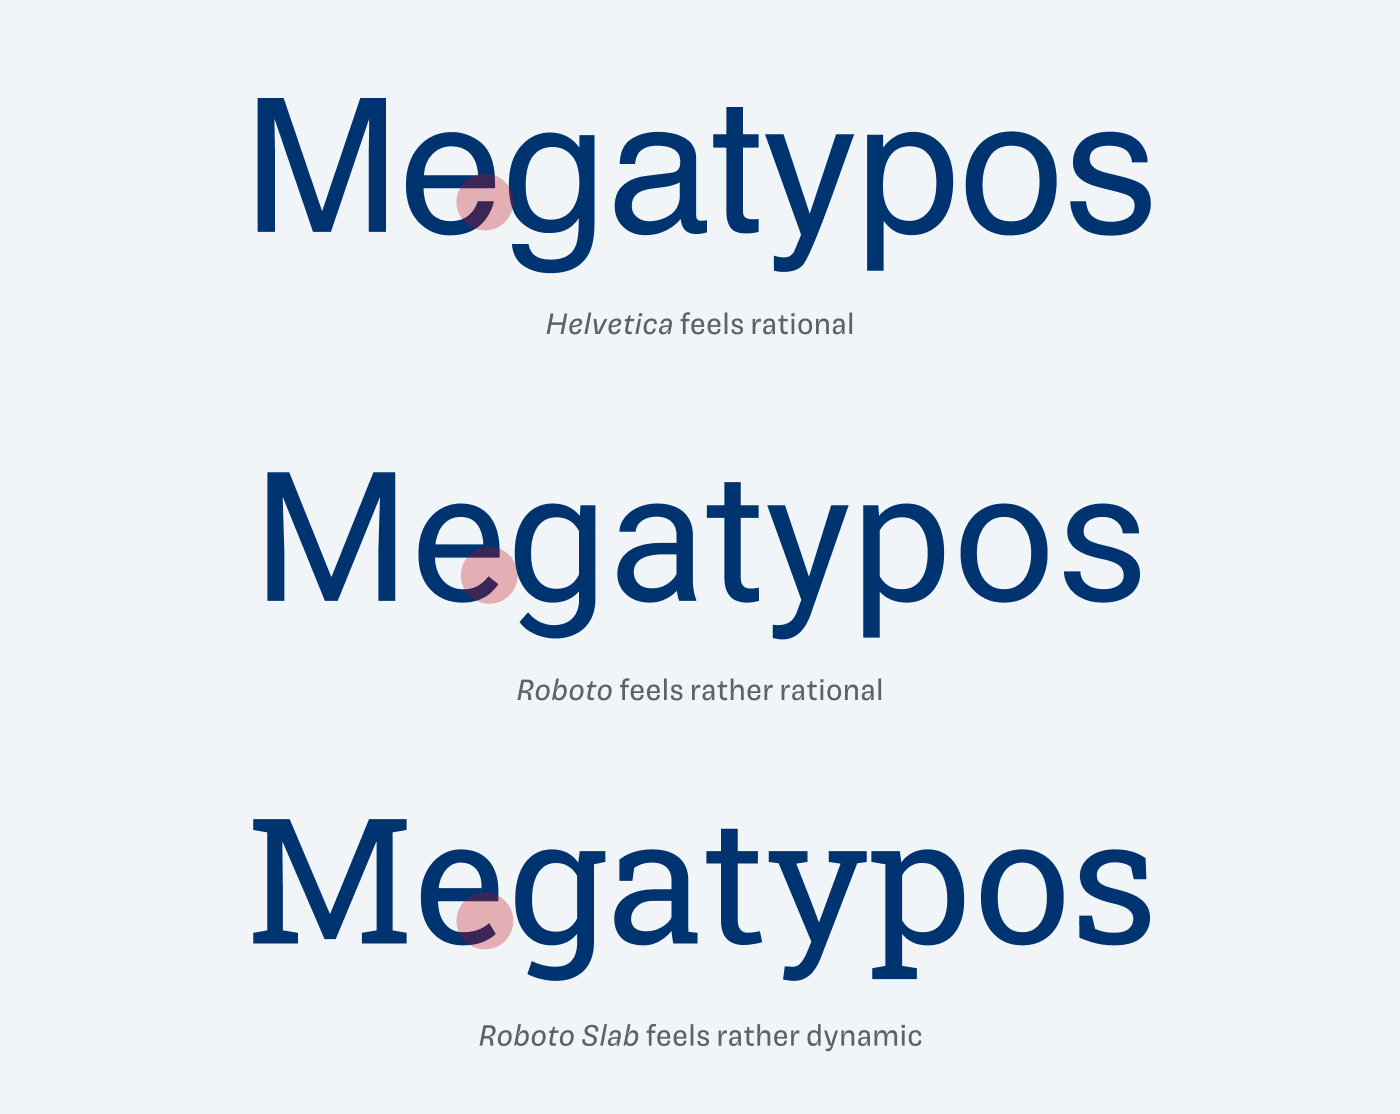 Helvetica feels rational, Roboto feels rather rational, Roboto Slab feels rather dynamic